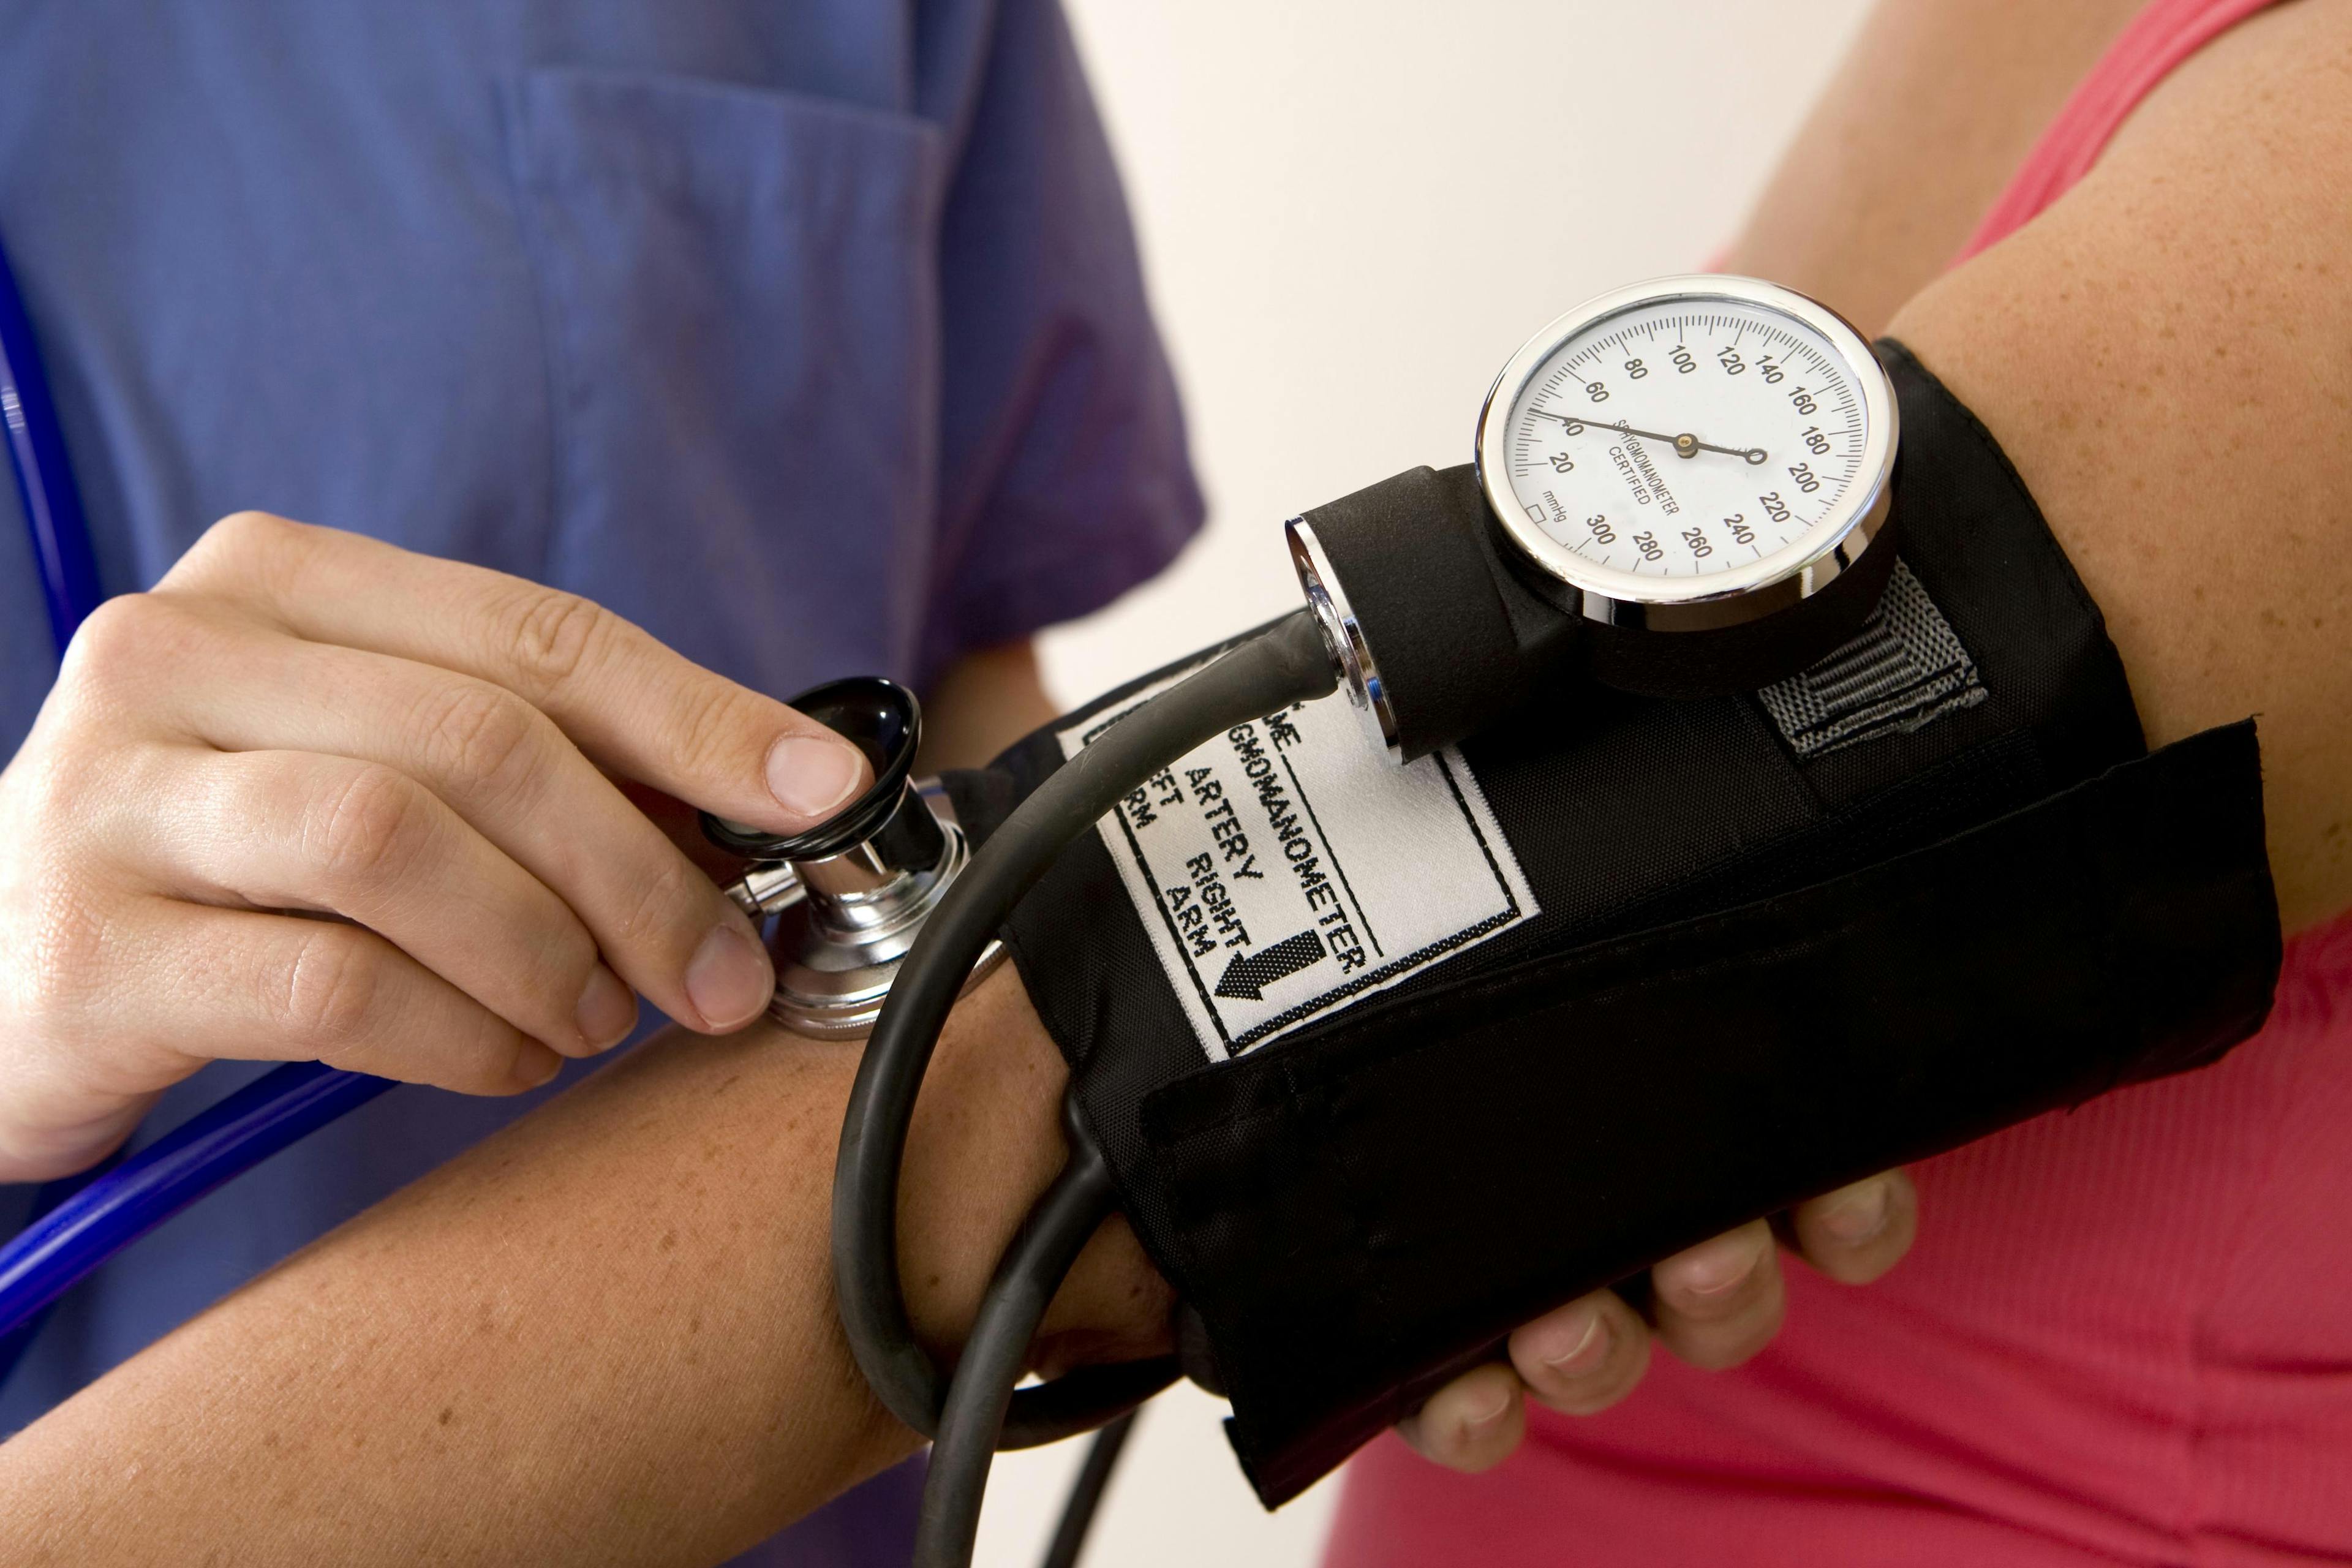 Blood pressure cuff around a woman's arm.